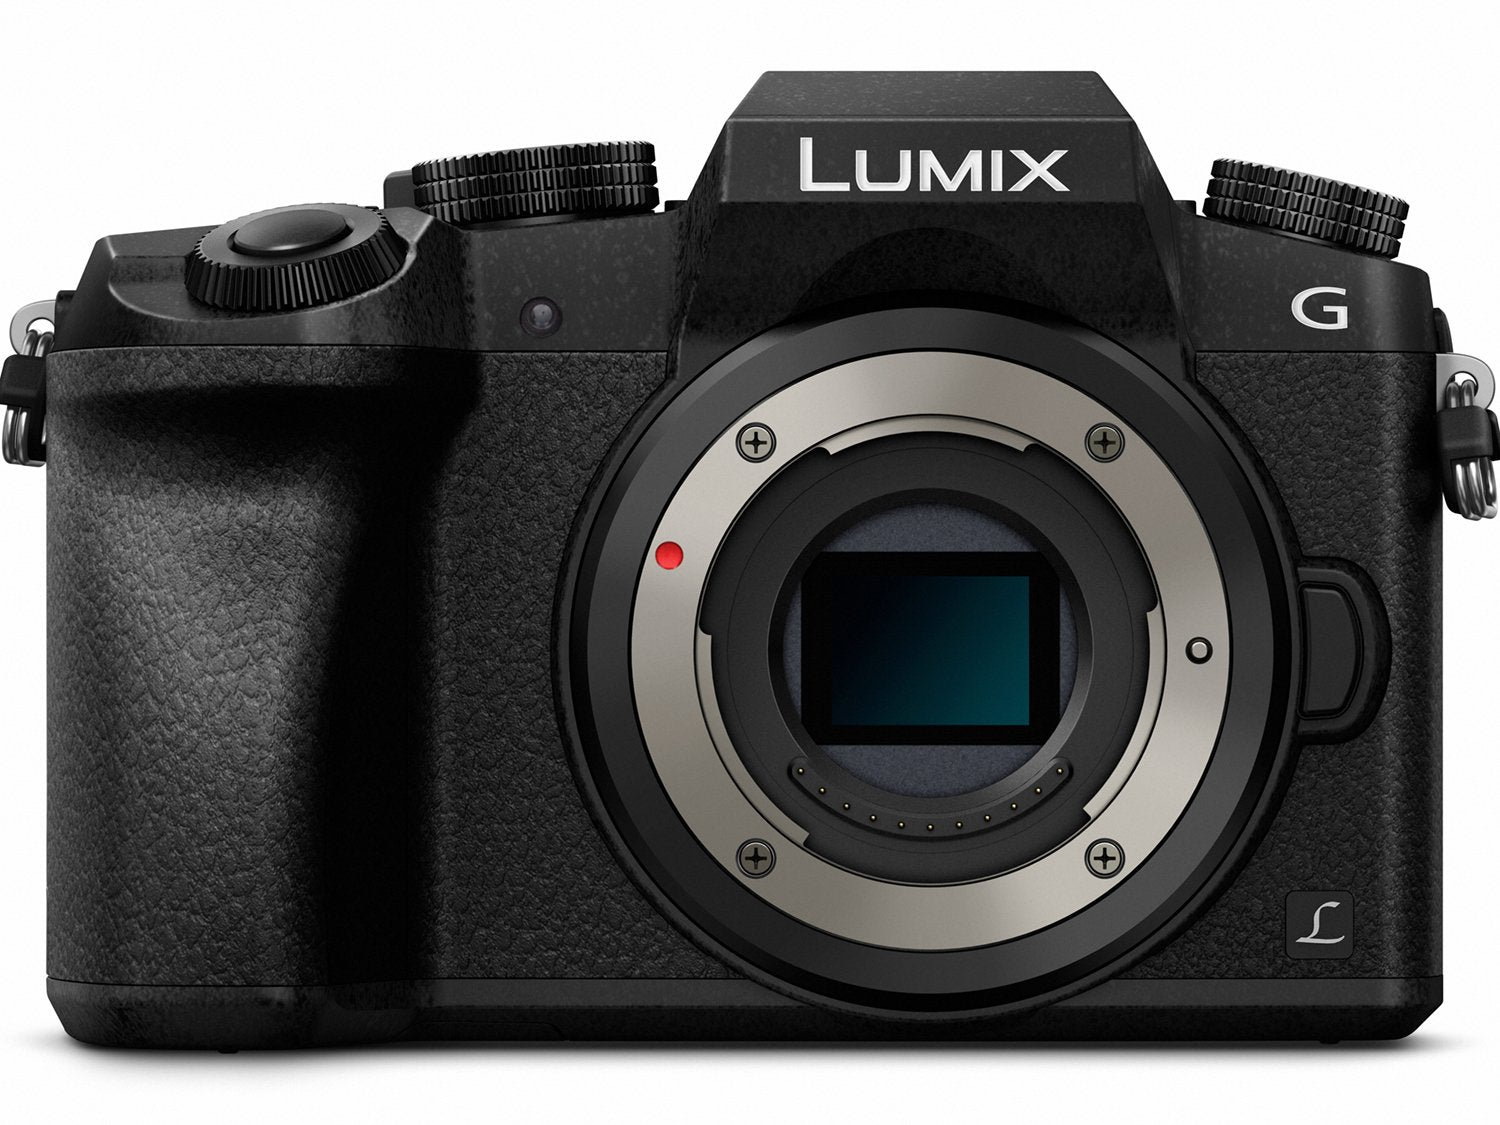 PANASONIC LUMIX G7 4K Digital Mirrorless Camera Bundle with LUMIX G Vario 14-42mm and 45-150mm Dual Lens Kit